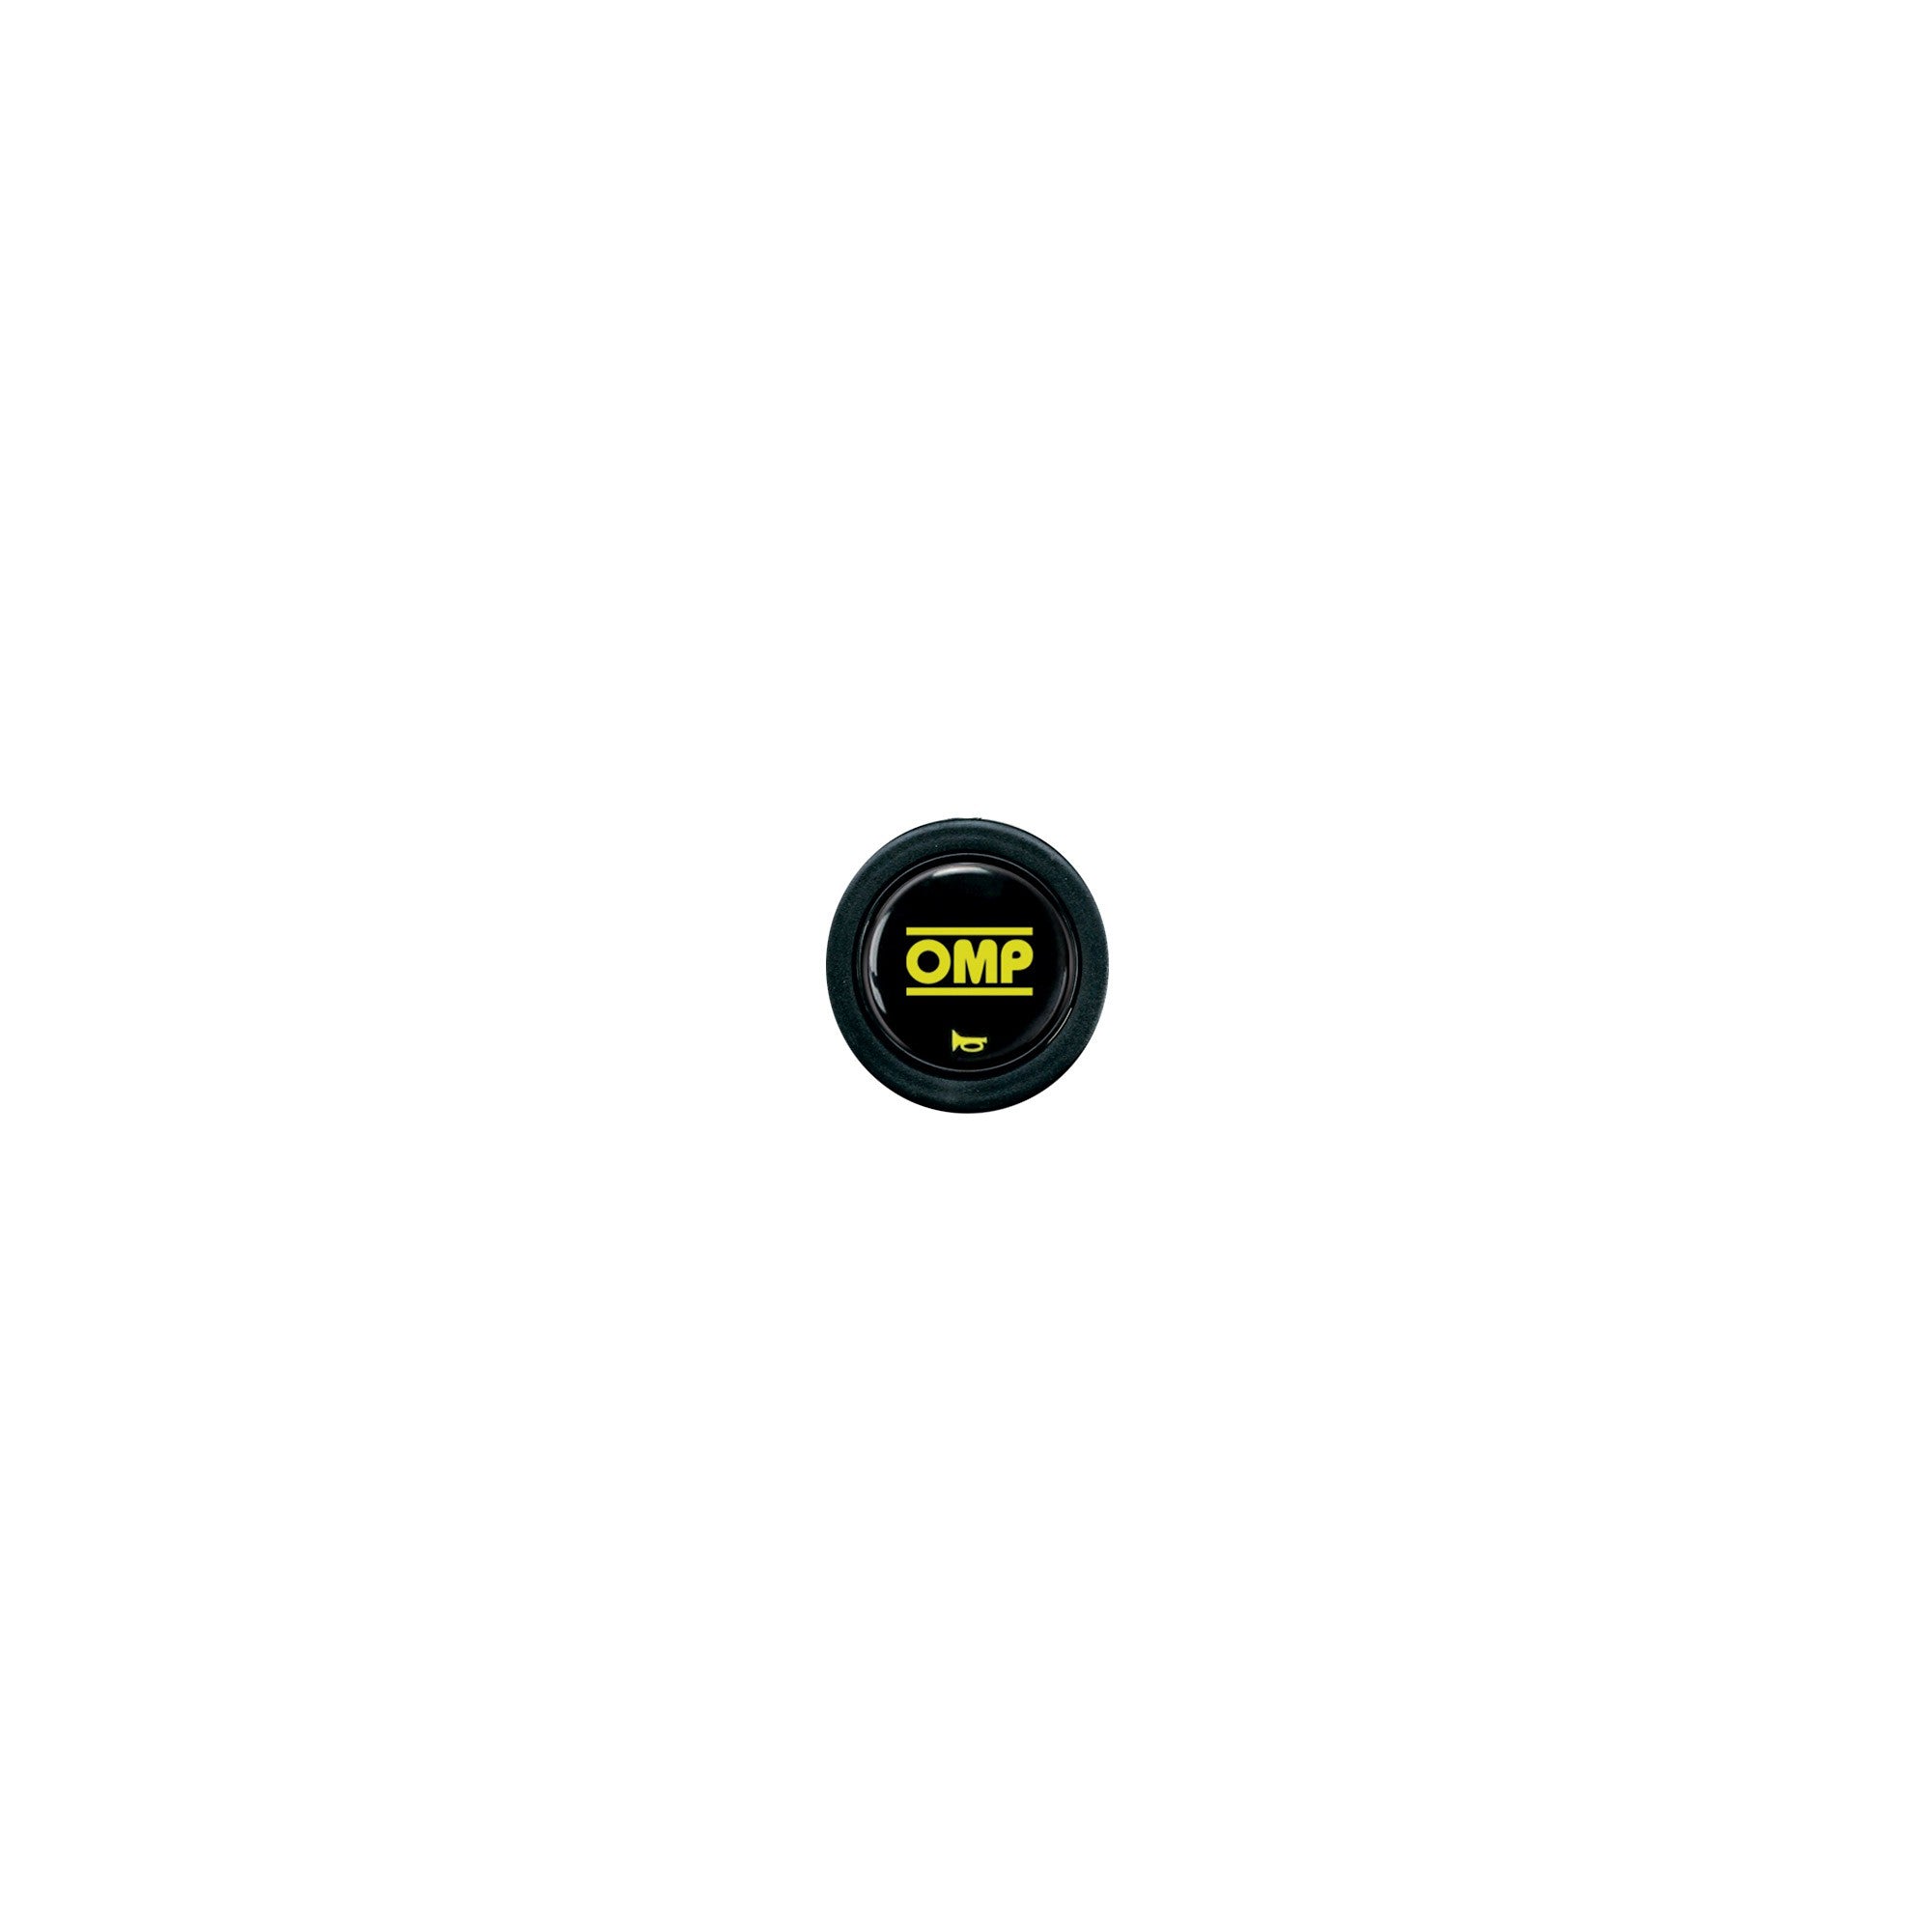 OMP OD0-1960 (OD/1960) Signal Button Photo-0 